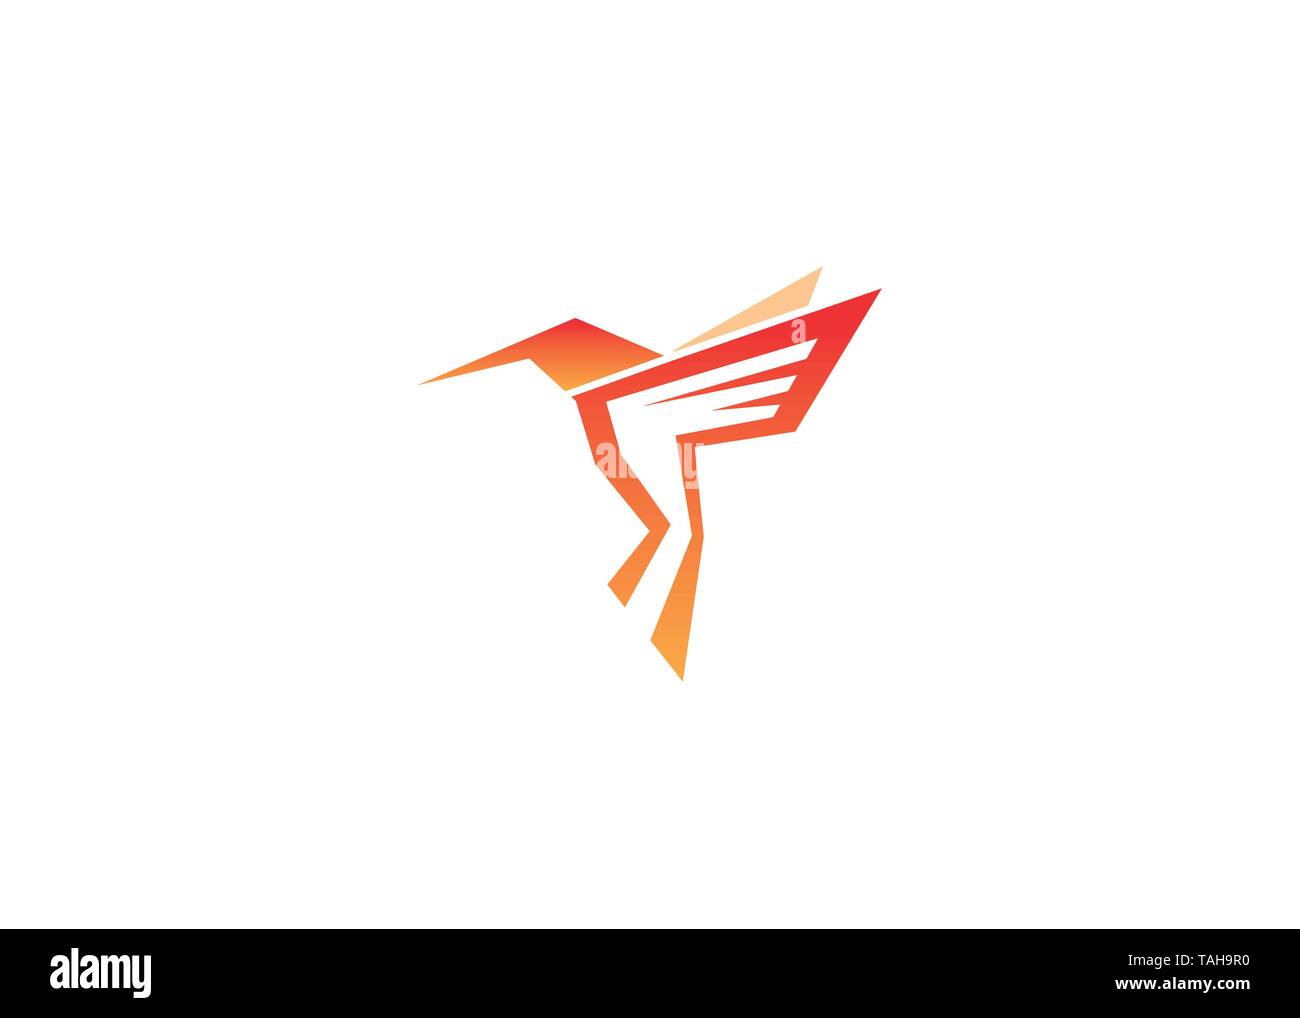 Creative Red Hummingbird Logo Stock Vector